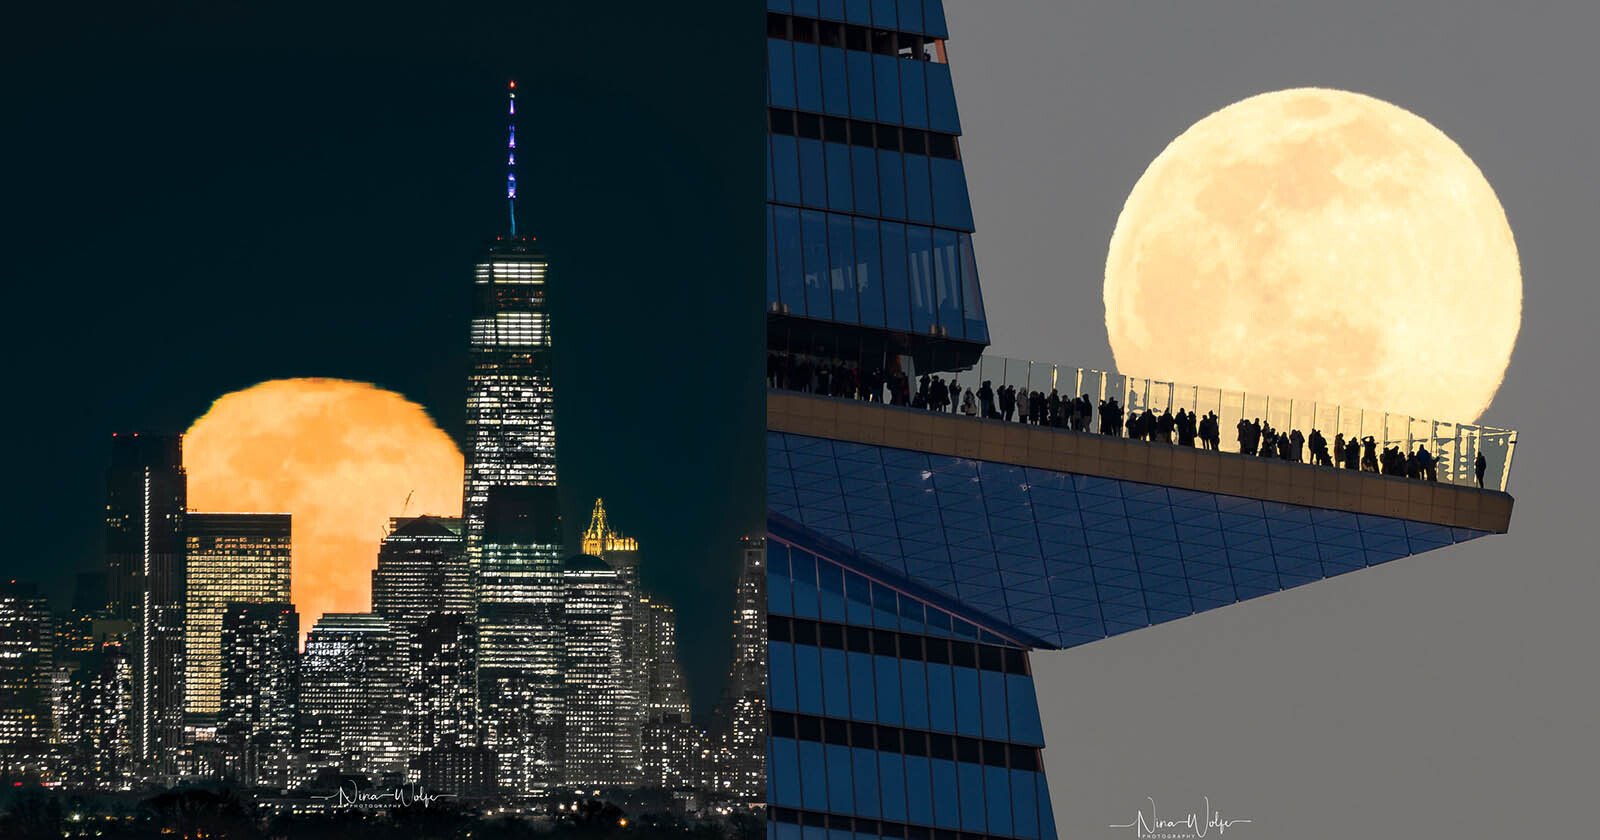 Photographers Optical Illusion Photos Make the Moon Look Gigantic